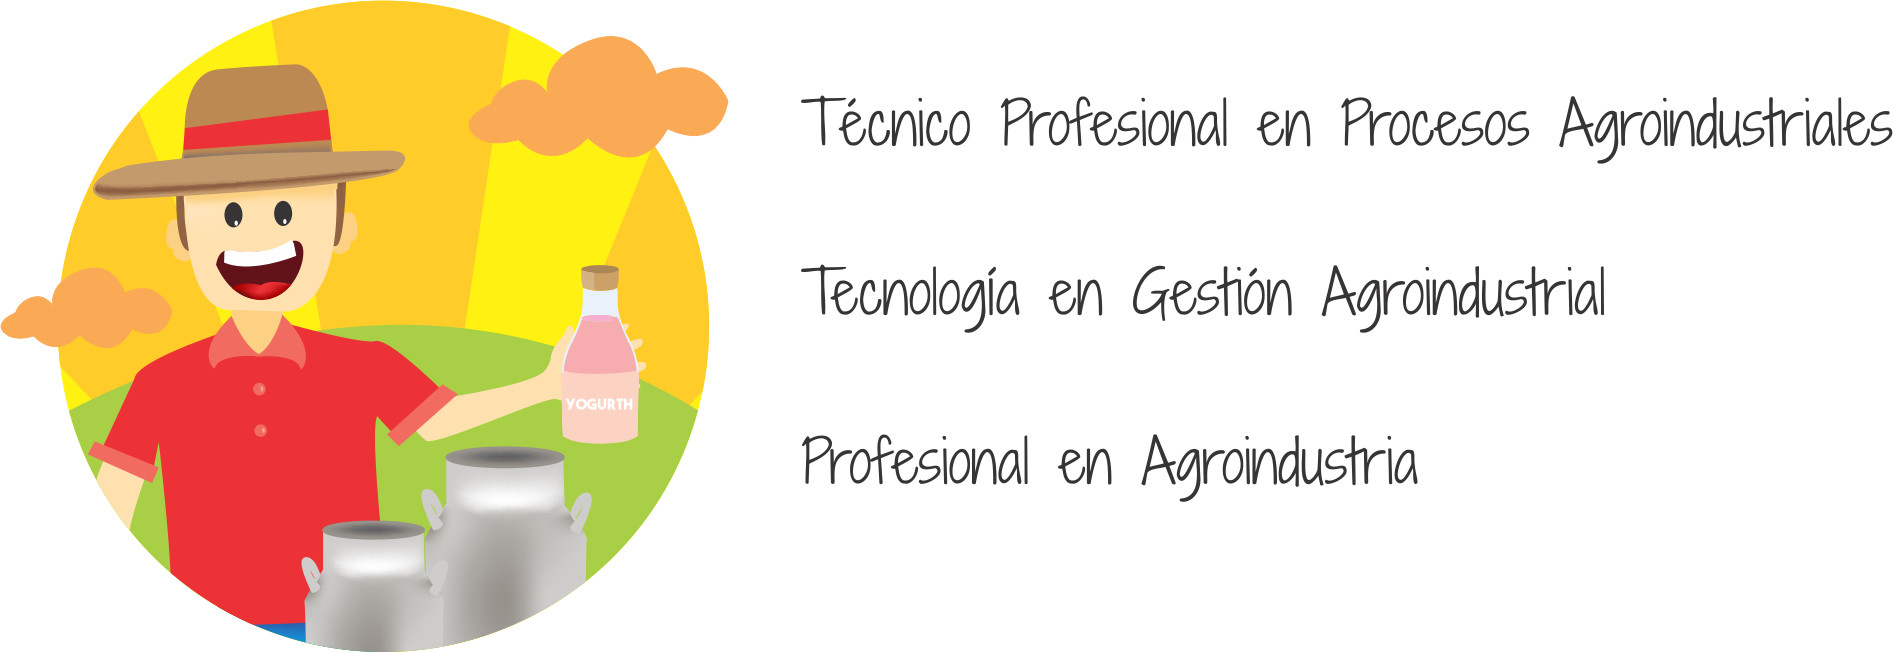 Profesional en Agroindustria en sus tres niveles